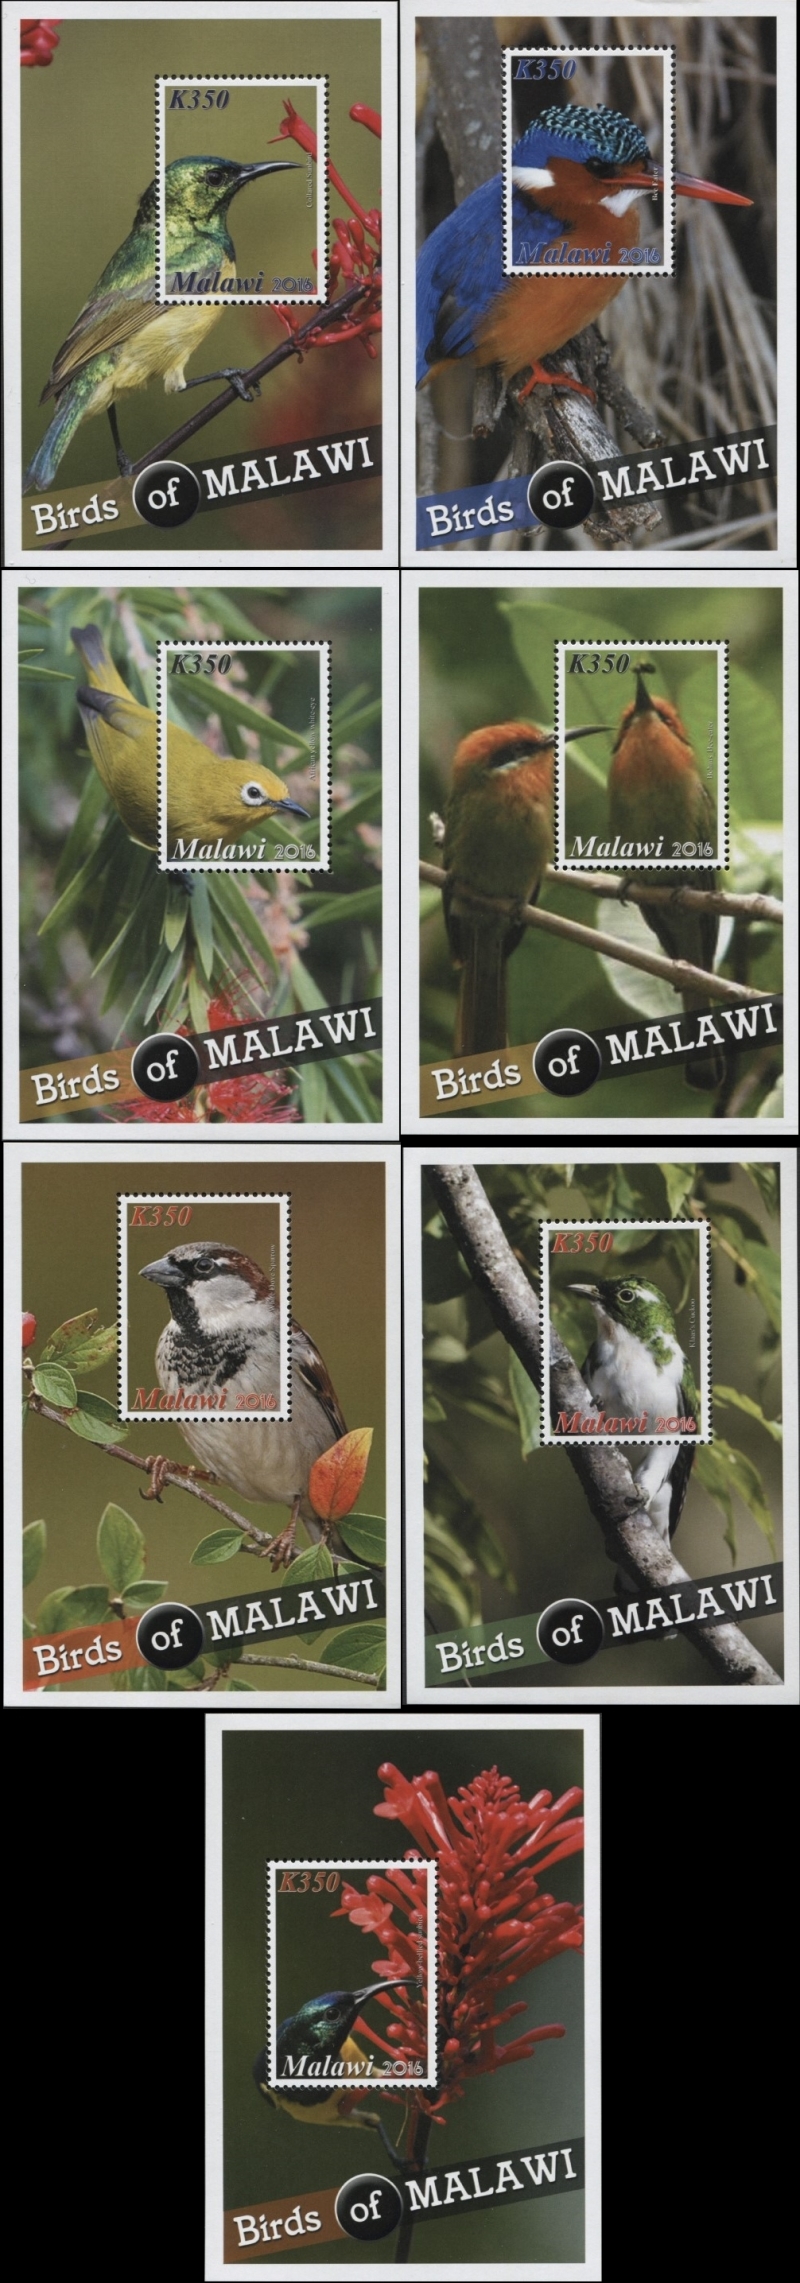 Malawi 2016 Indigenous Birds of Malawi Souvenir Sheets of 1 Scott 812-818